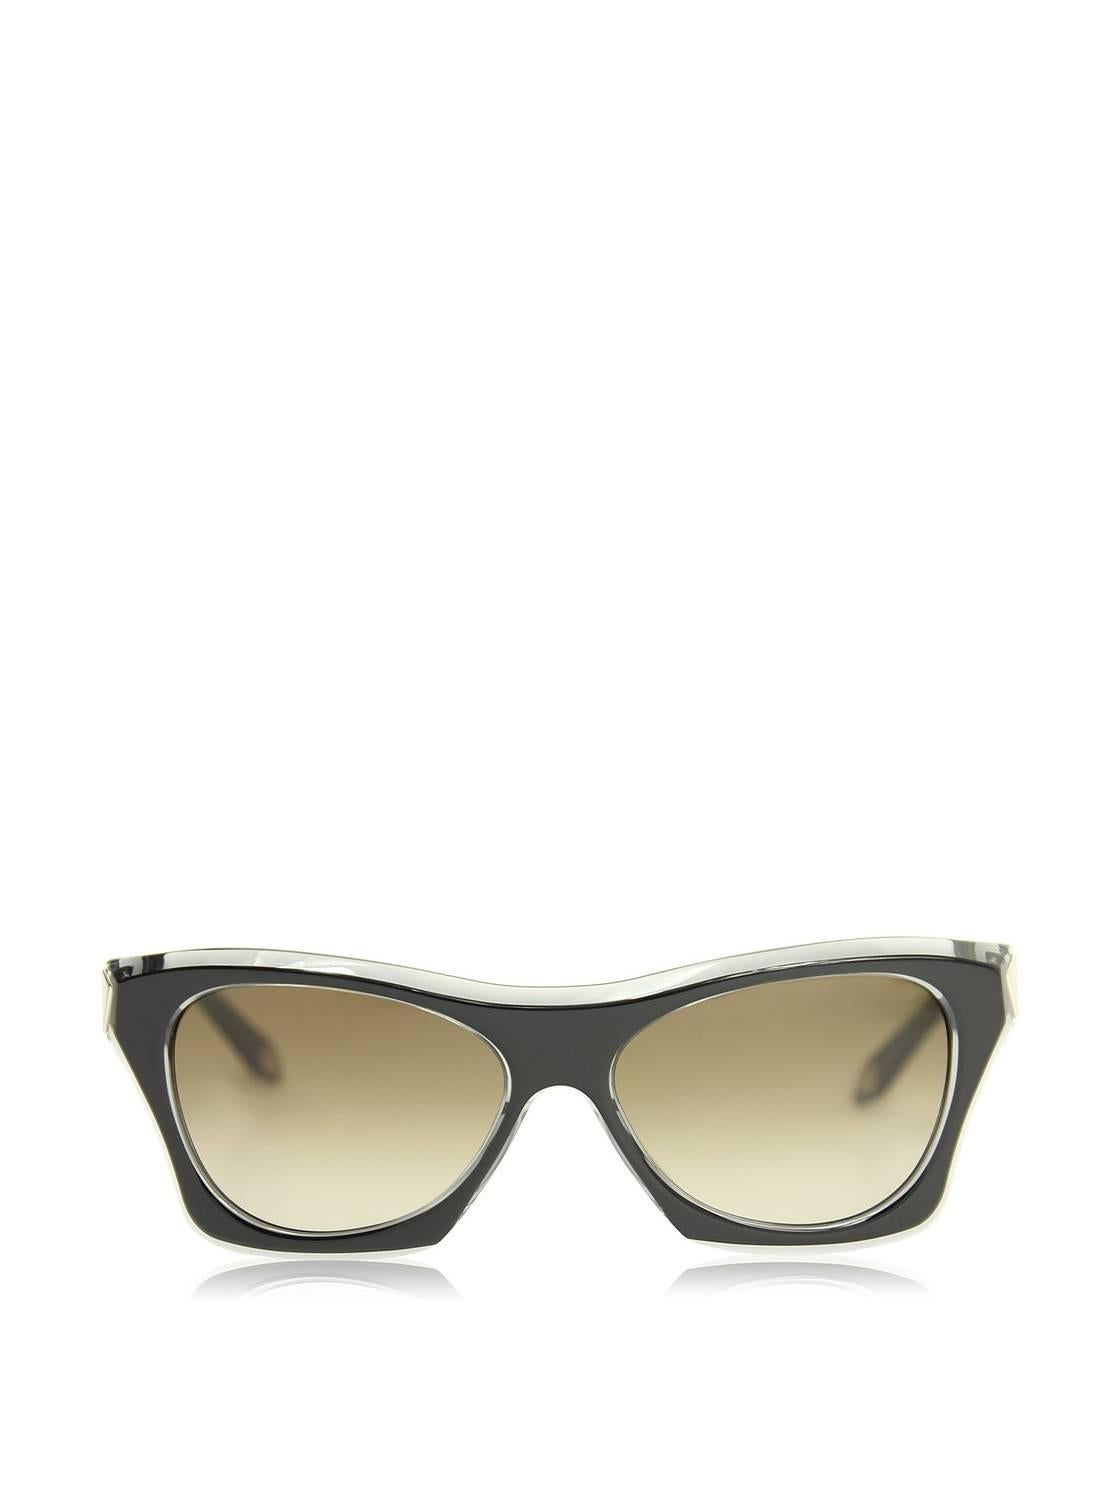 Givenchy SGV 923 01AL - Black Grey / Brown Gradient Sunglasses In New Condition In Los Angeles, CA